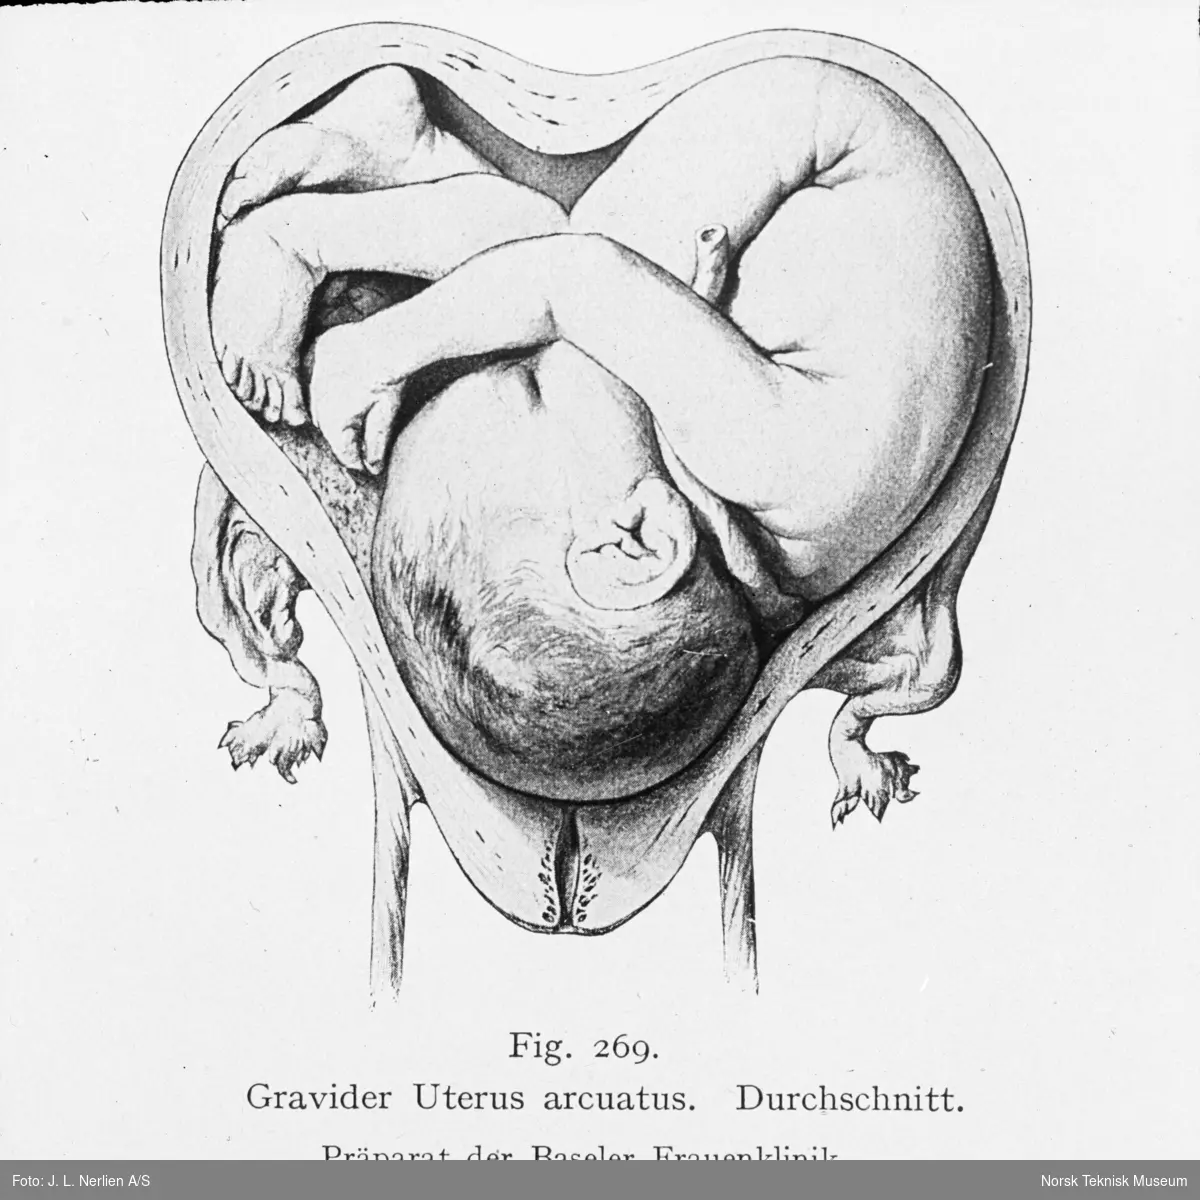 Avfotografert tegning av en konkav livmor med foster